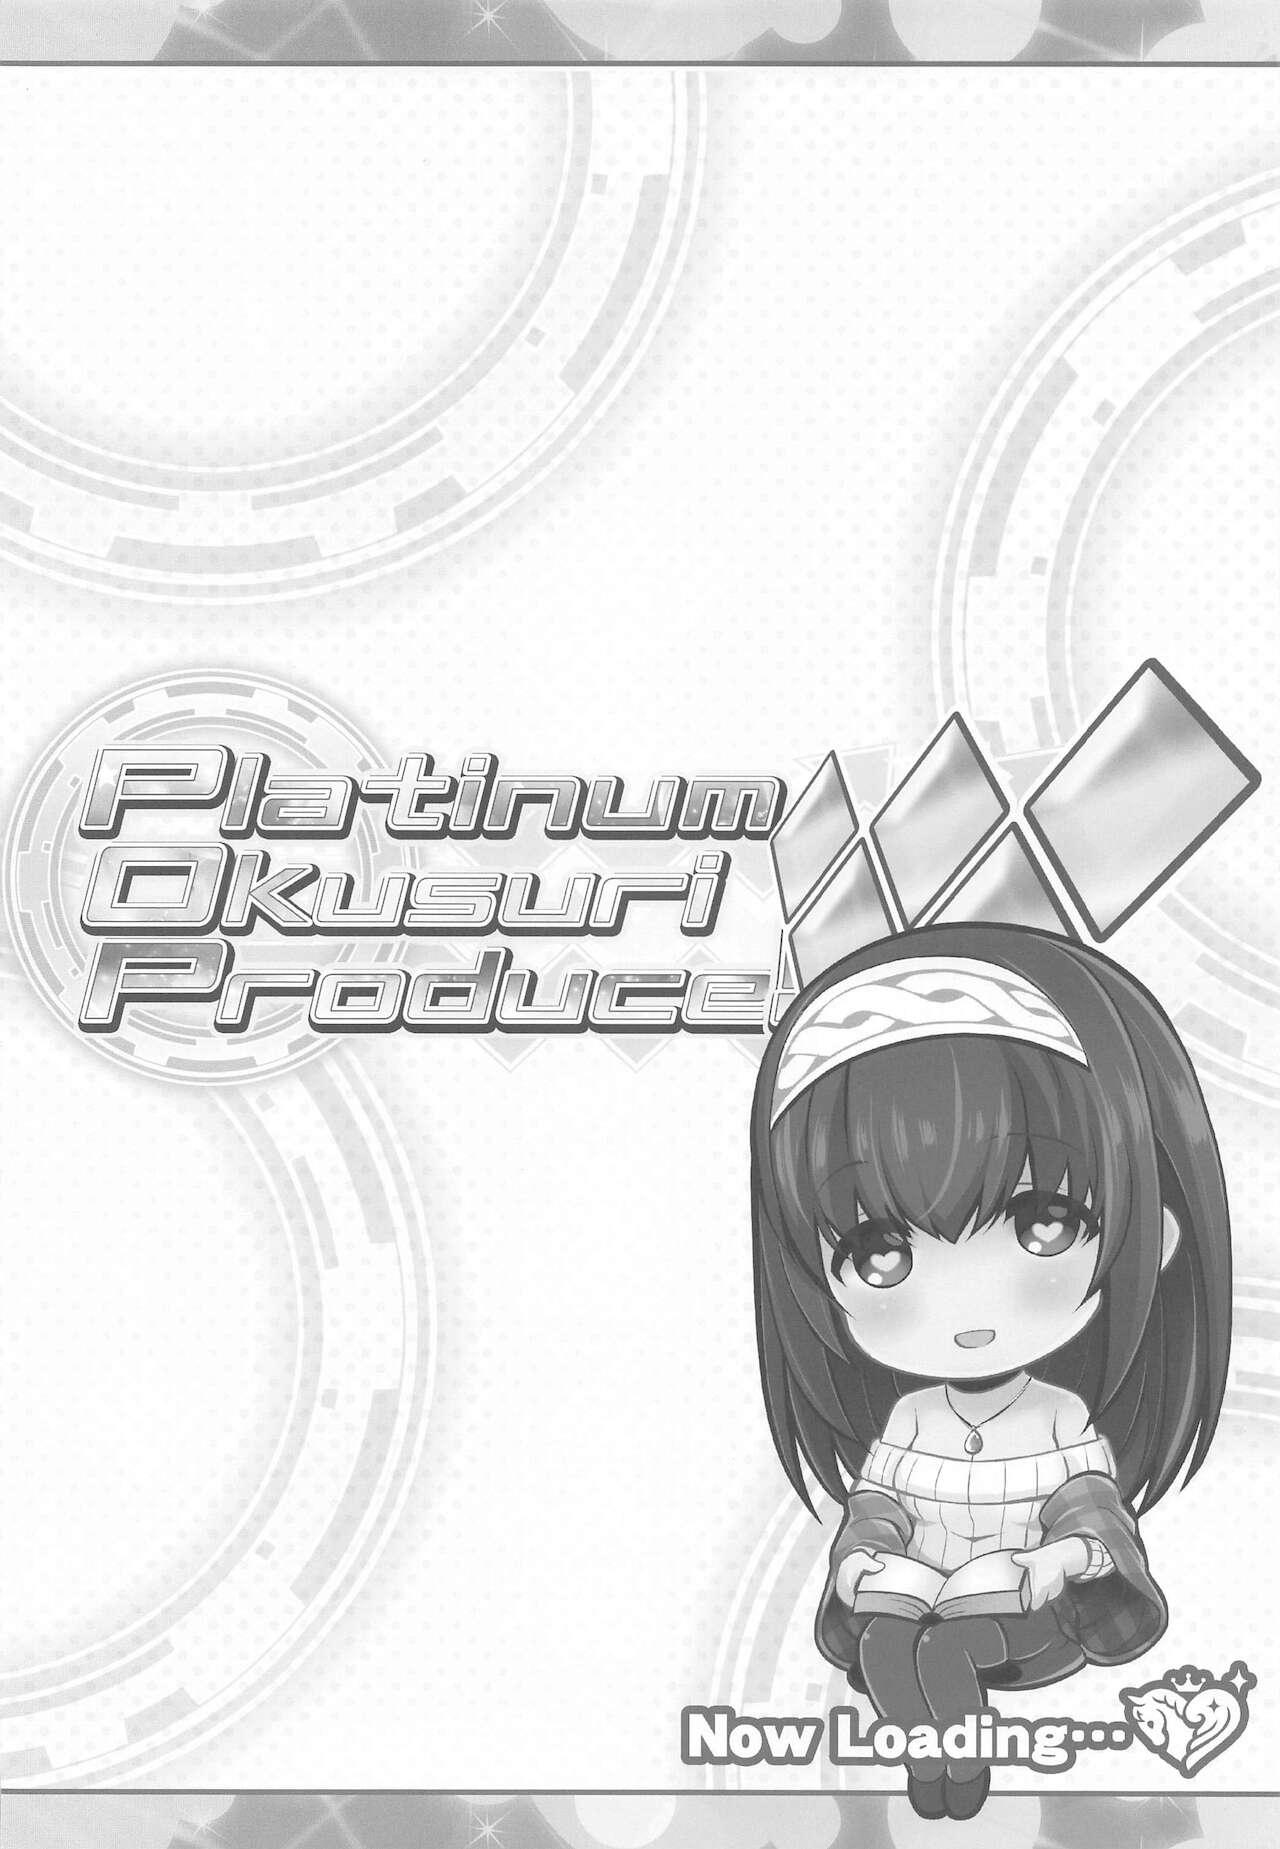 Platinum Okusuri Produce!!!! ◇◇◇◇◇ 2